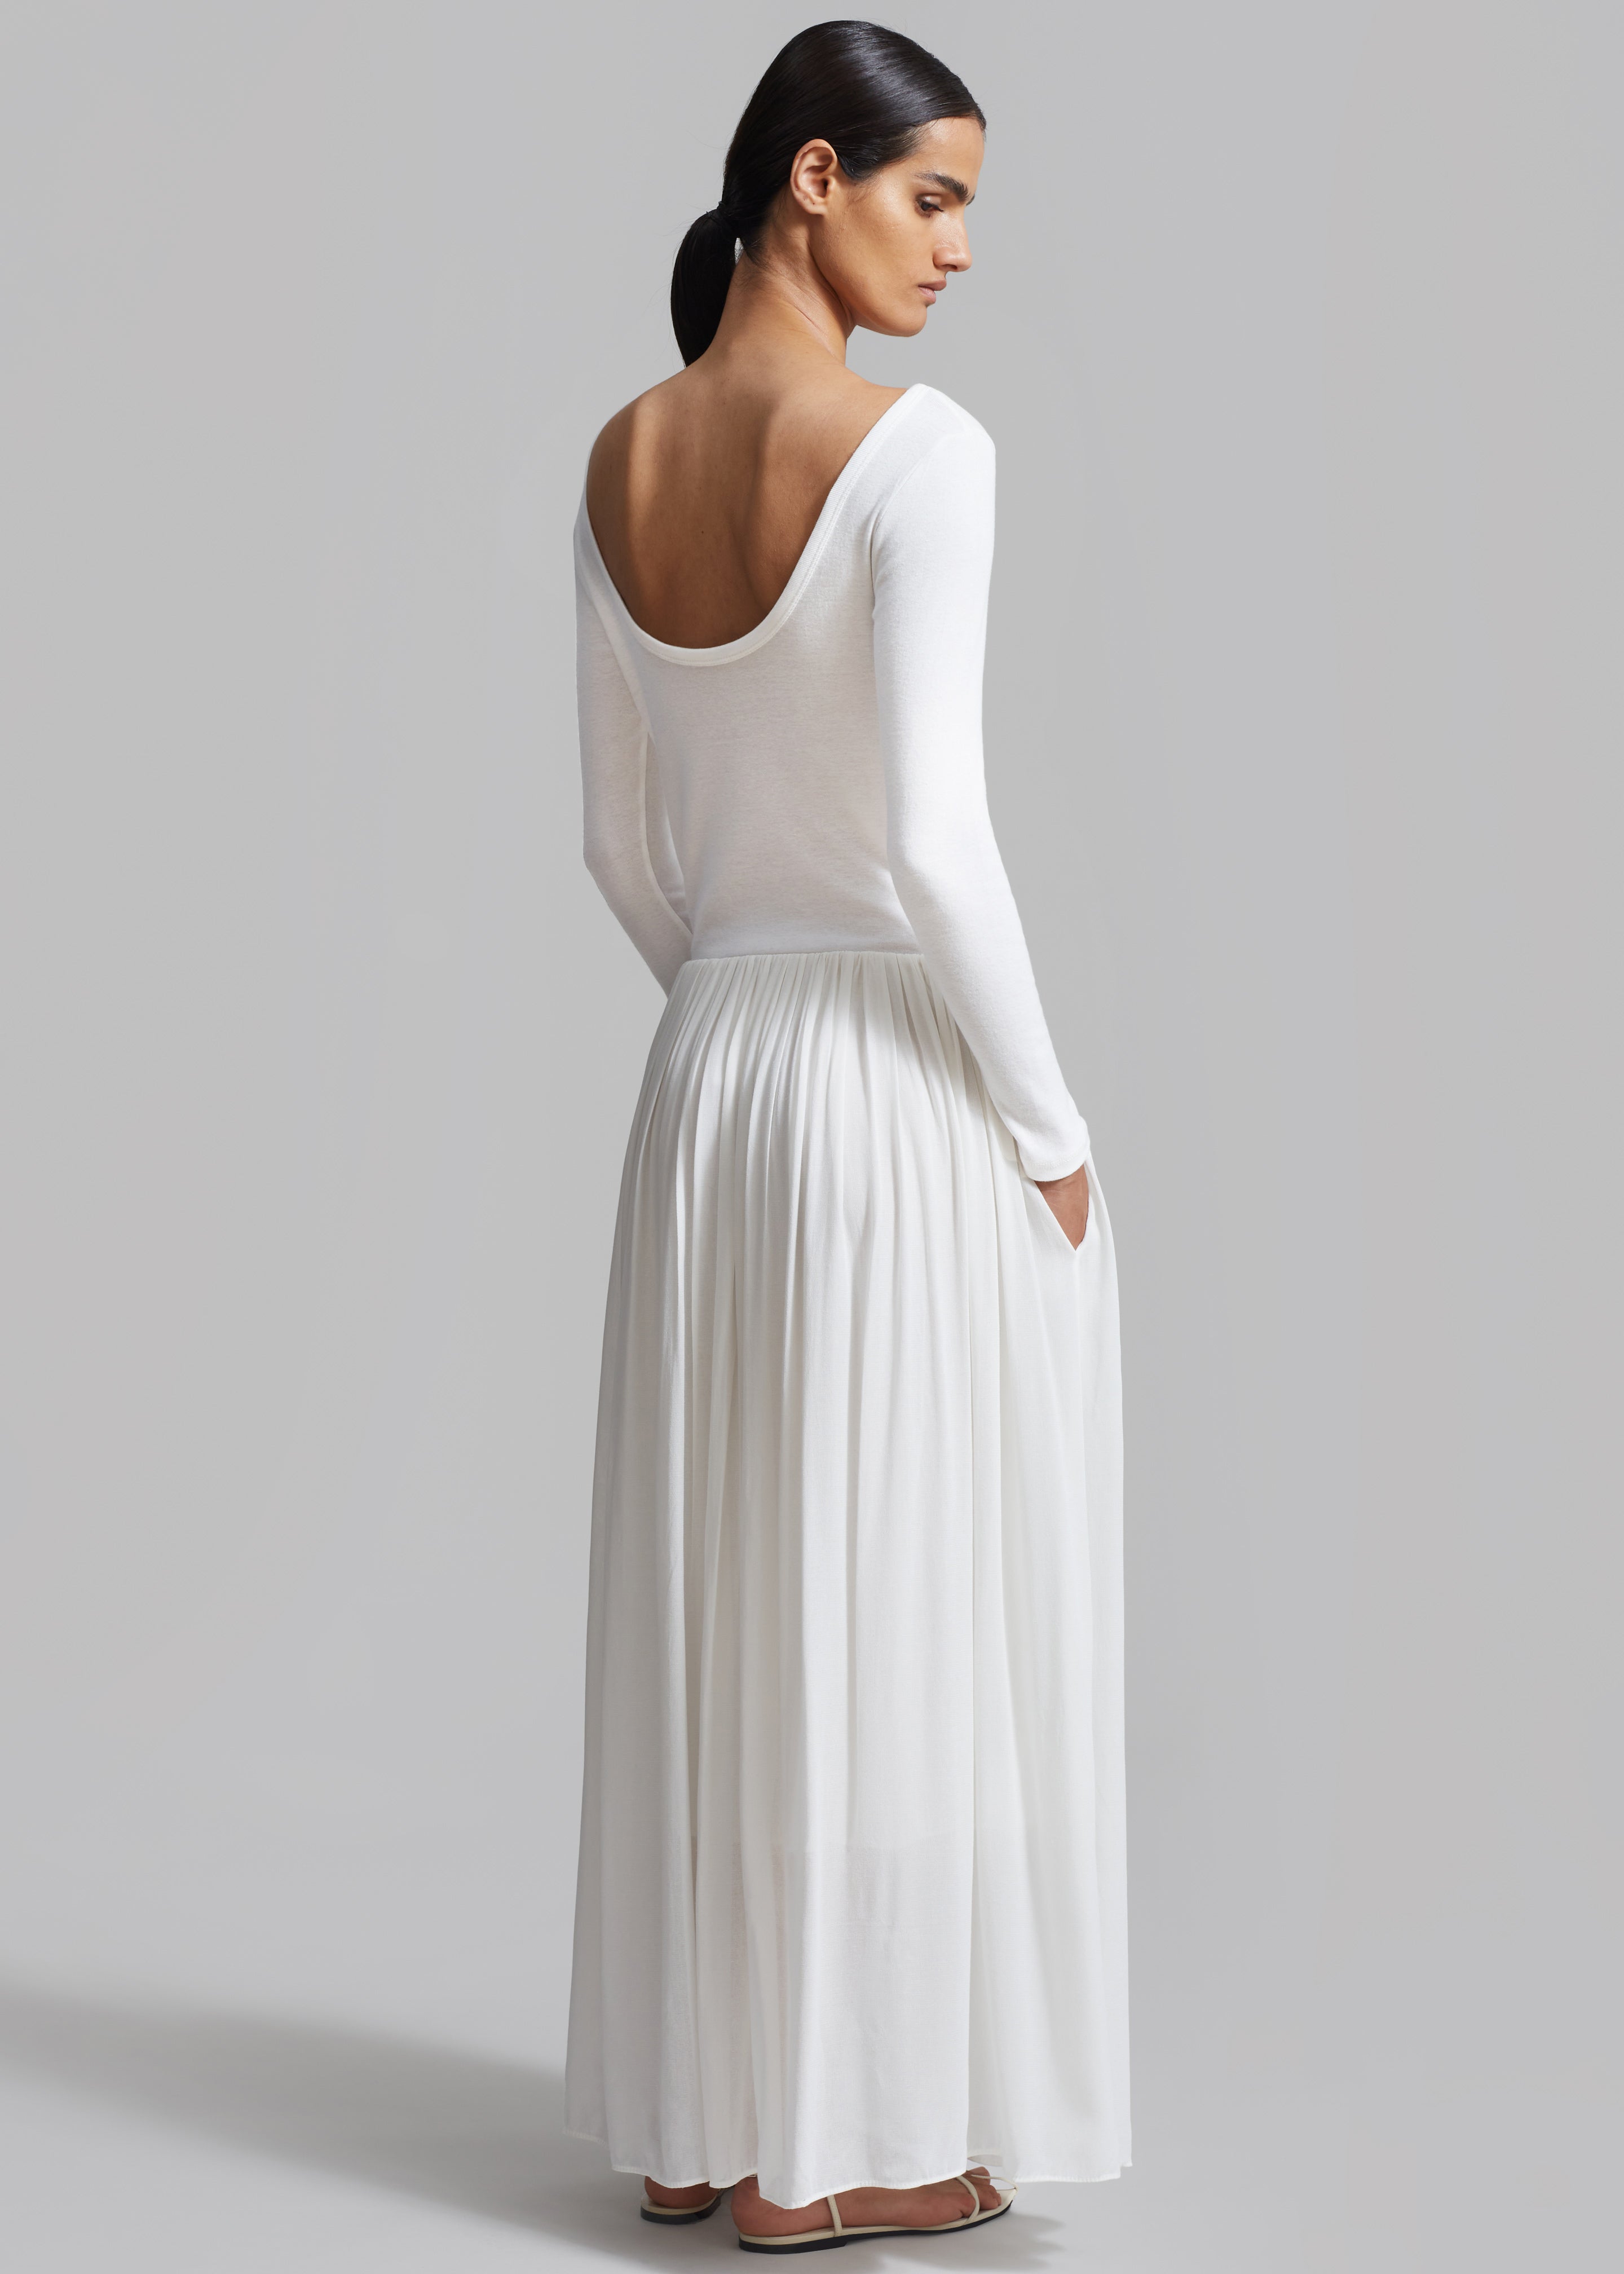 Odette Gathered Skirt Maxi Dress - White - 9